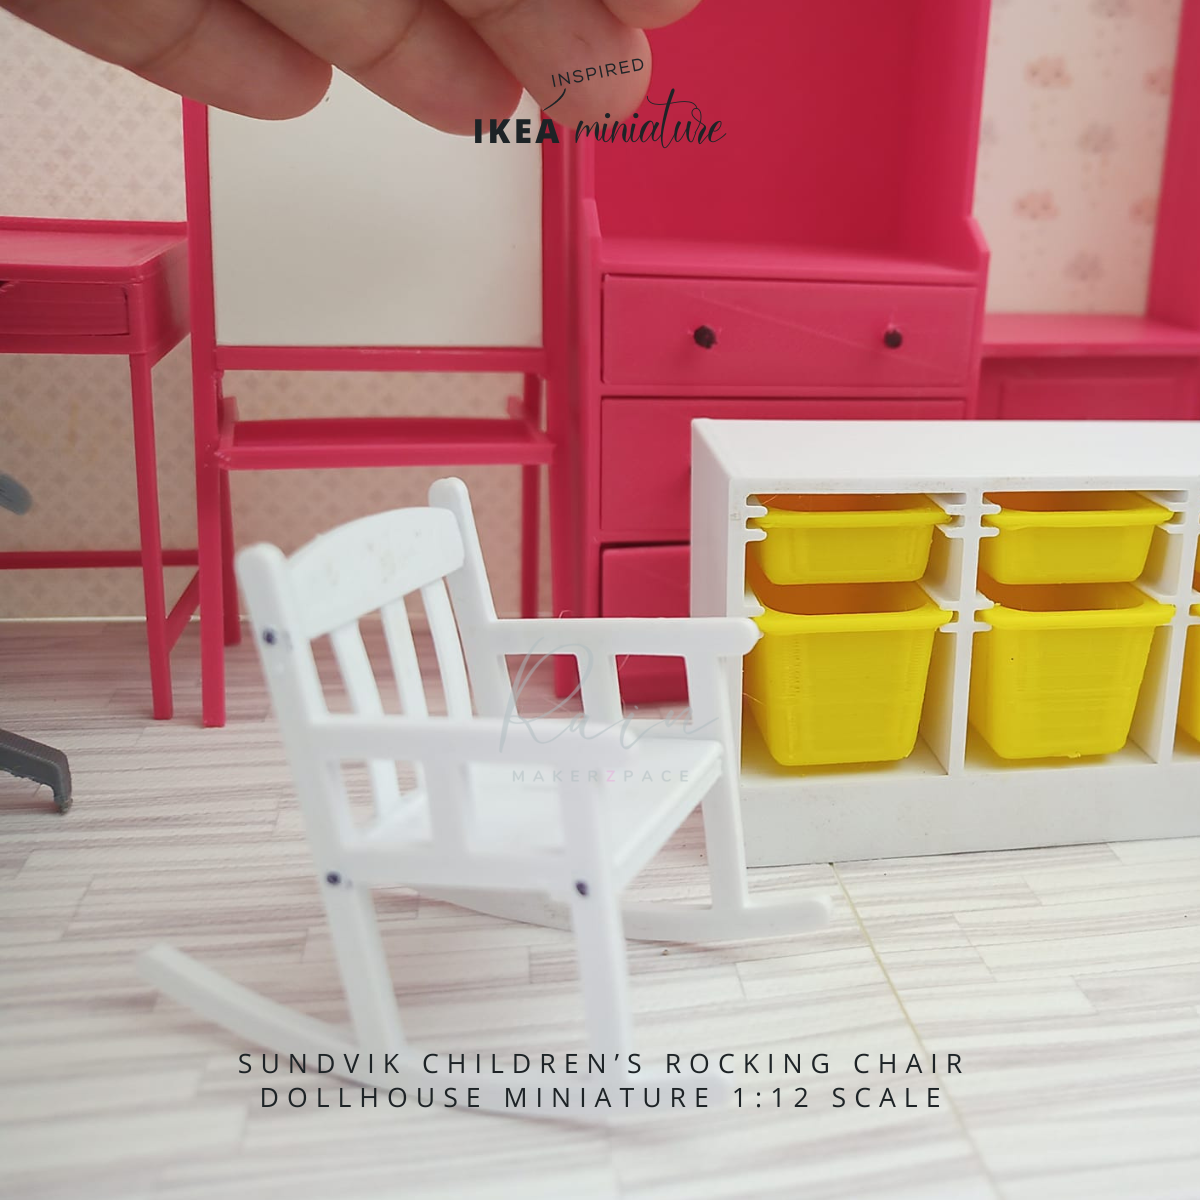 SUNDVIK CHILDREN’S ROCKING CHAIR DOLLHOUSE MINIATURE 1:12 SCALE STL file Miniature Rocking Chair Miniature Furniture for 1:12 Dollhouse・Model to download and 3D print, RAIN